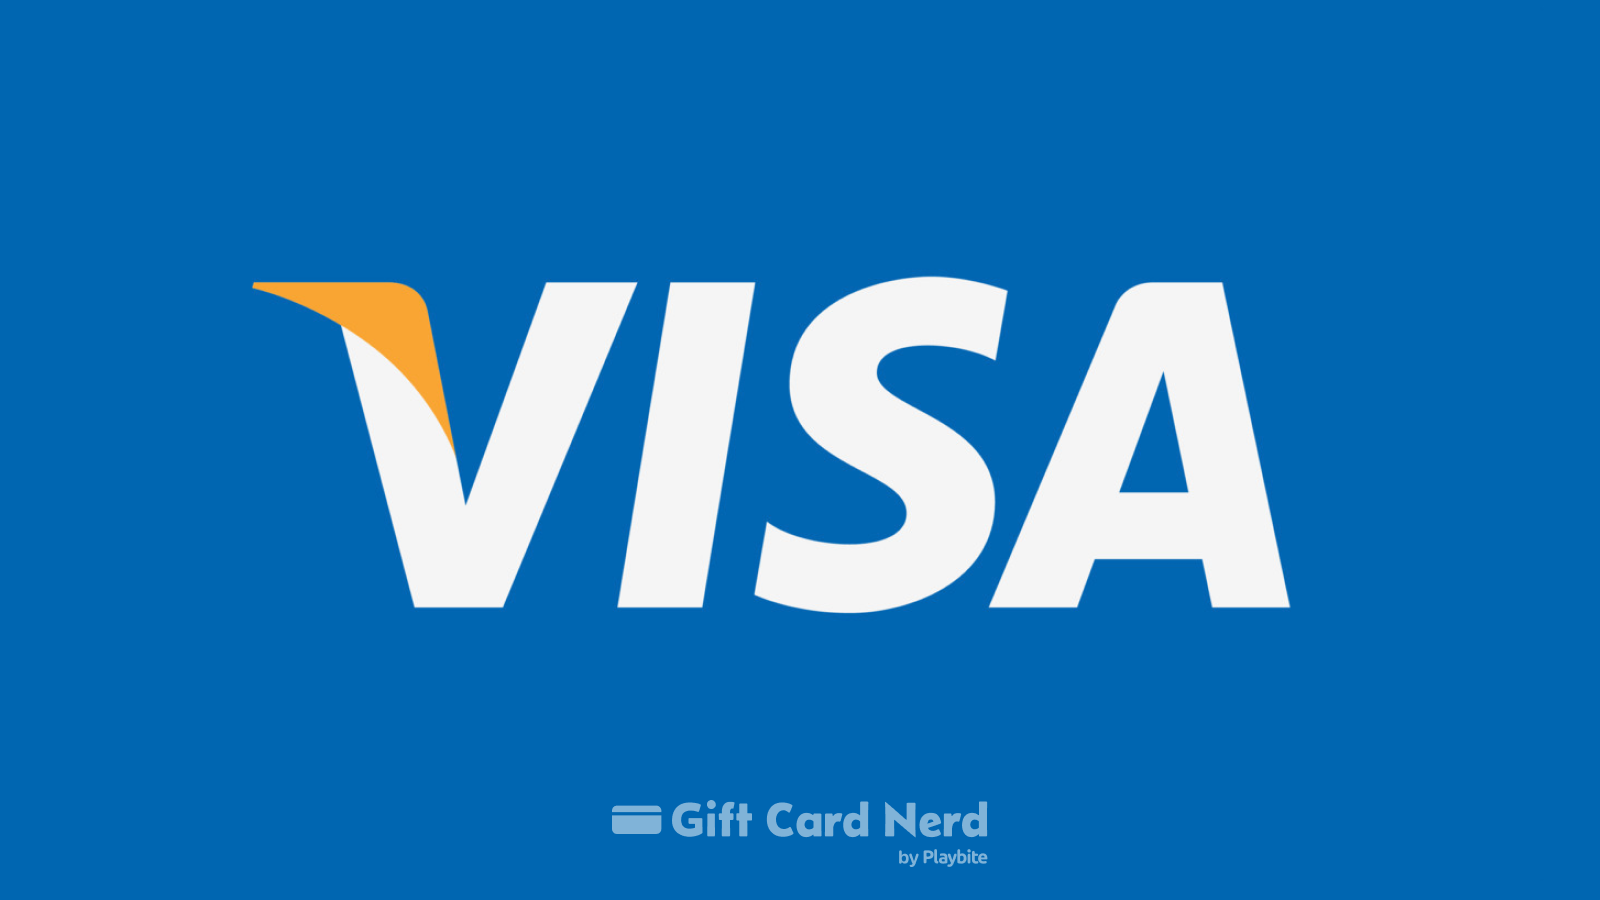 Can I Use a Visa Gift Card on DoorDash?